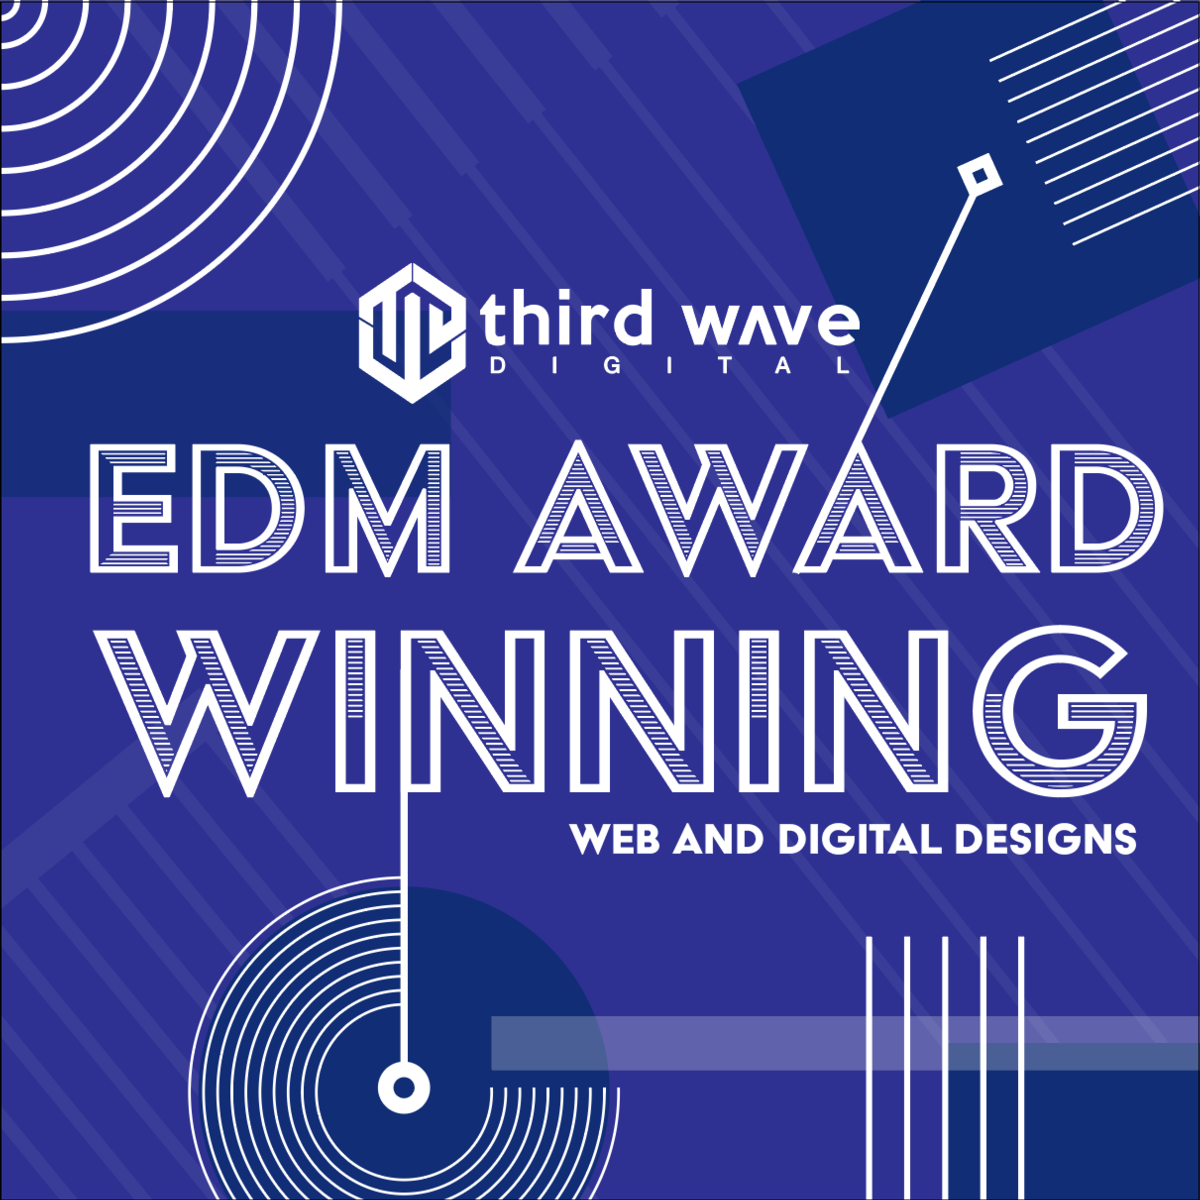 Digital Marketing experts, Web design and digital design EDM award winning